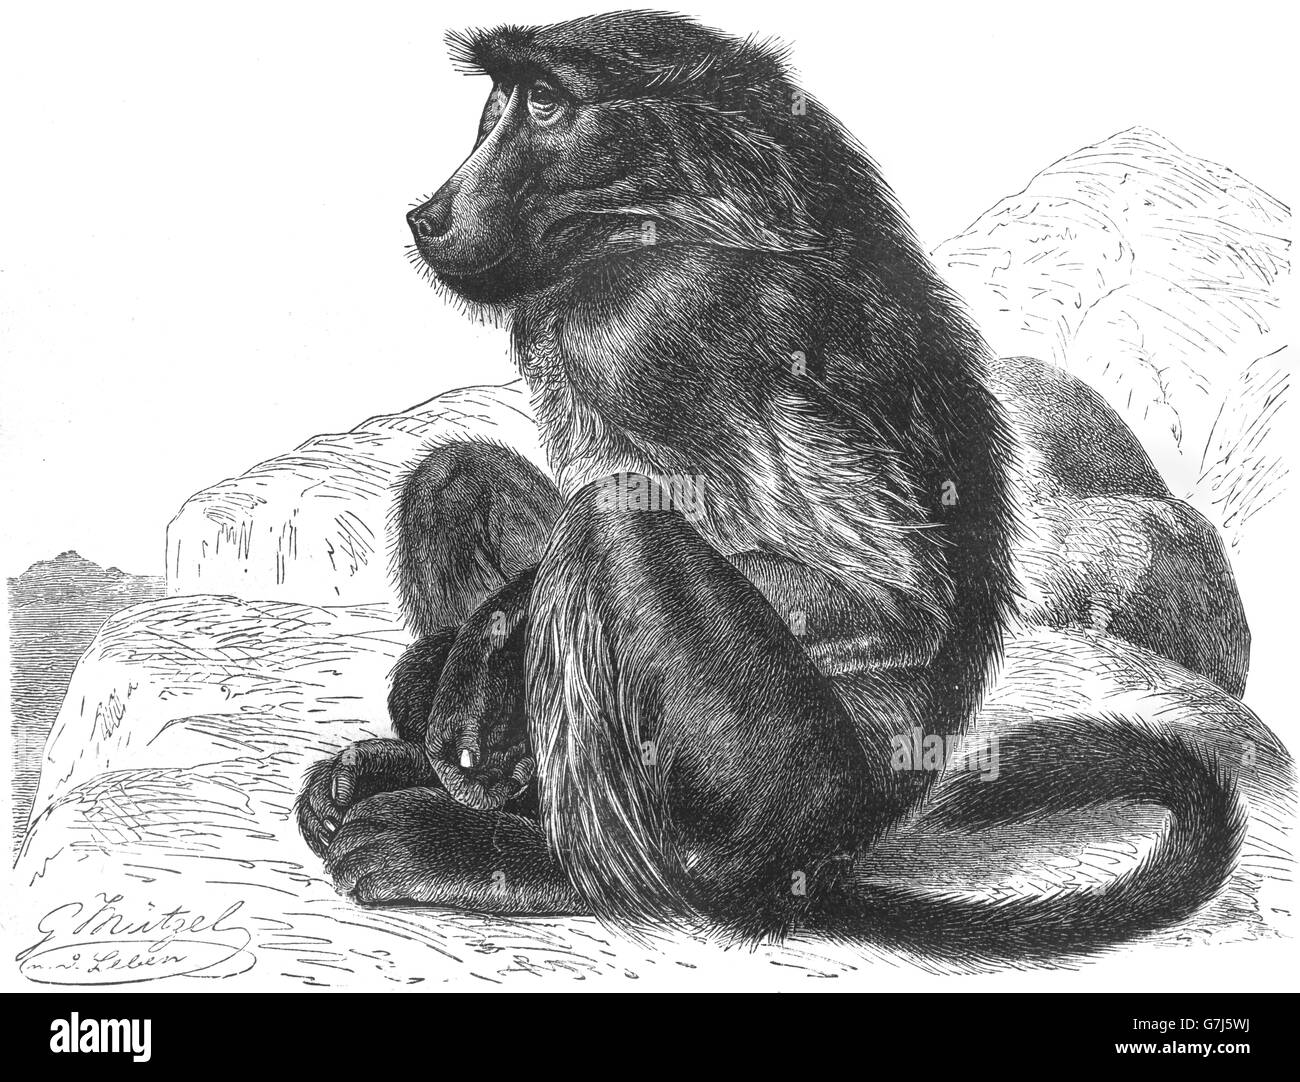 Chacma baboon, Papio ursinus, Cape baboon, Old World monkey, Cercopithecidae, illustration from book dated 1904 Stock Photo